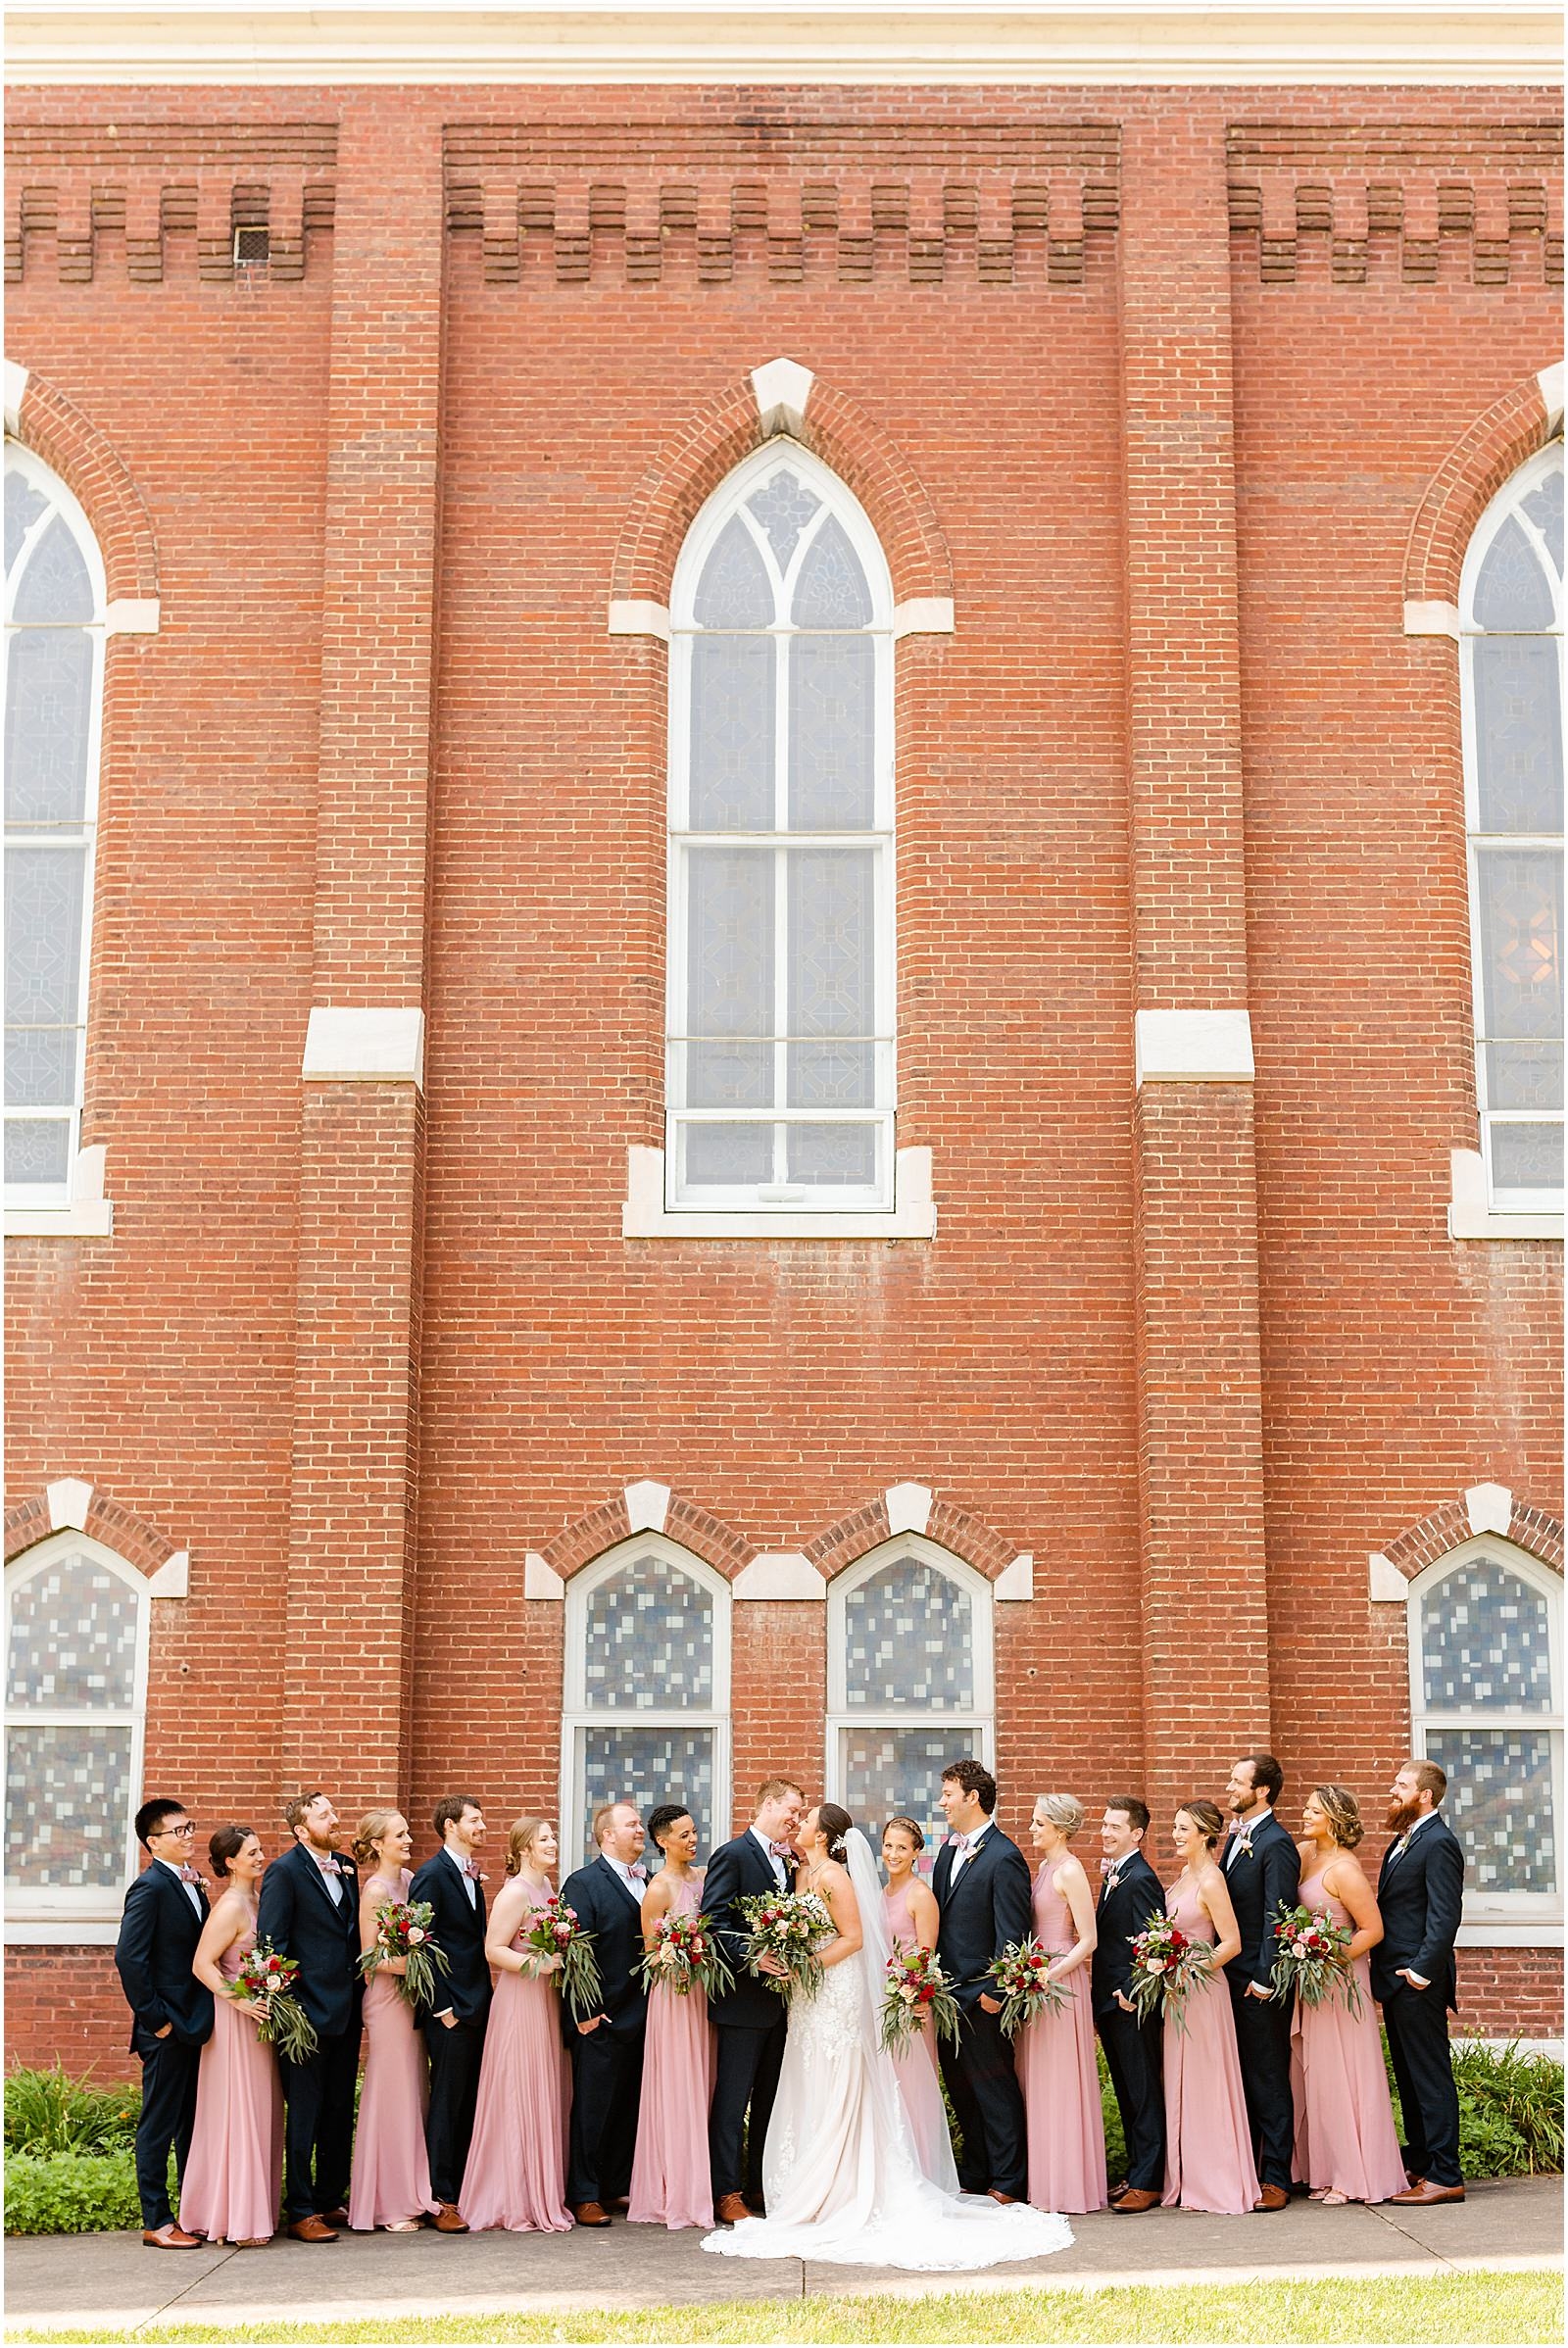 Deidra and Andrew | A Huntingburgh Indiana Wedding Bret and Brandie | Evansville Photographers | @bretandbrandie-0074.jpg